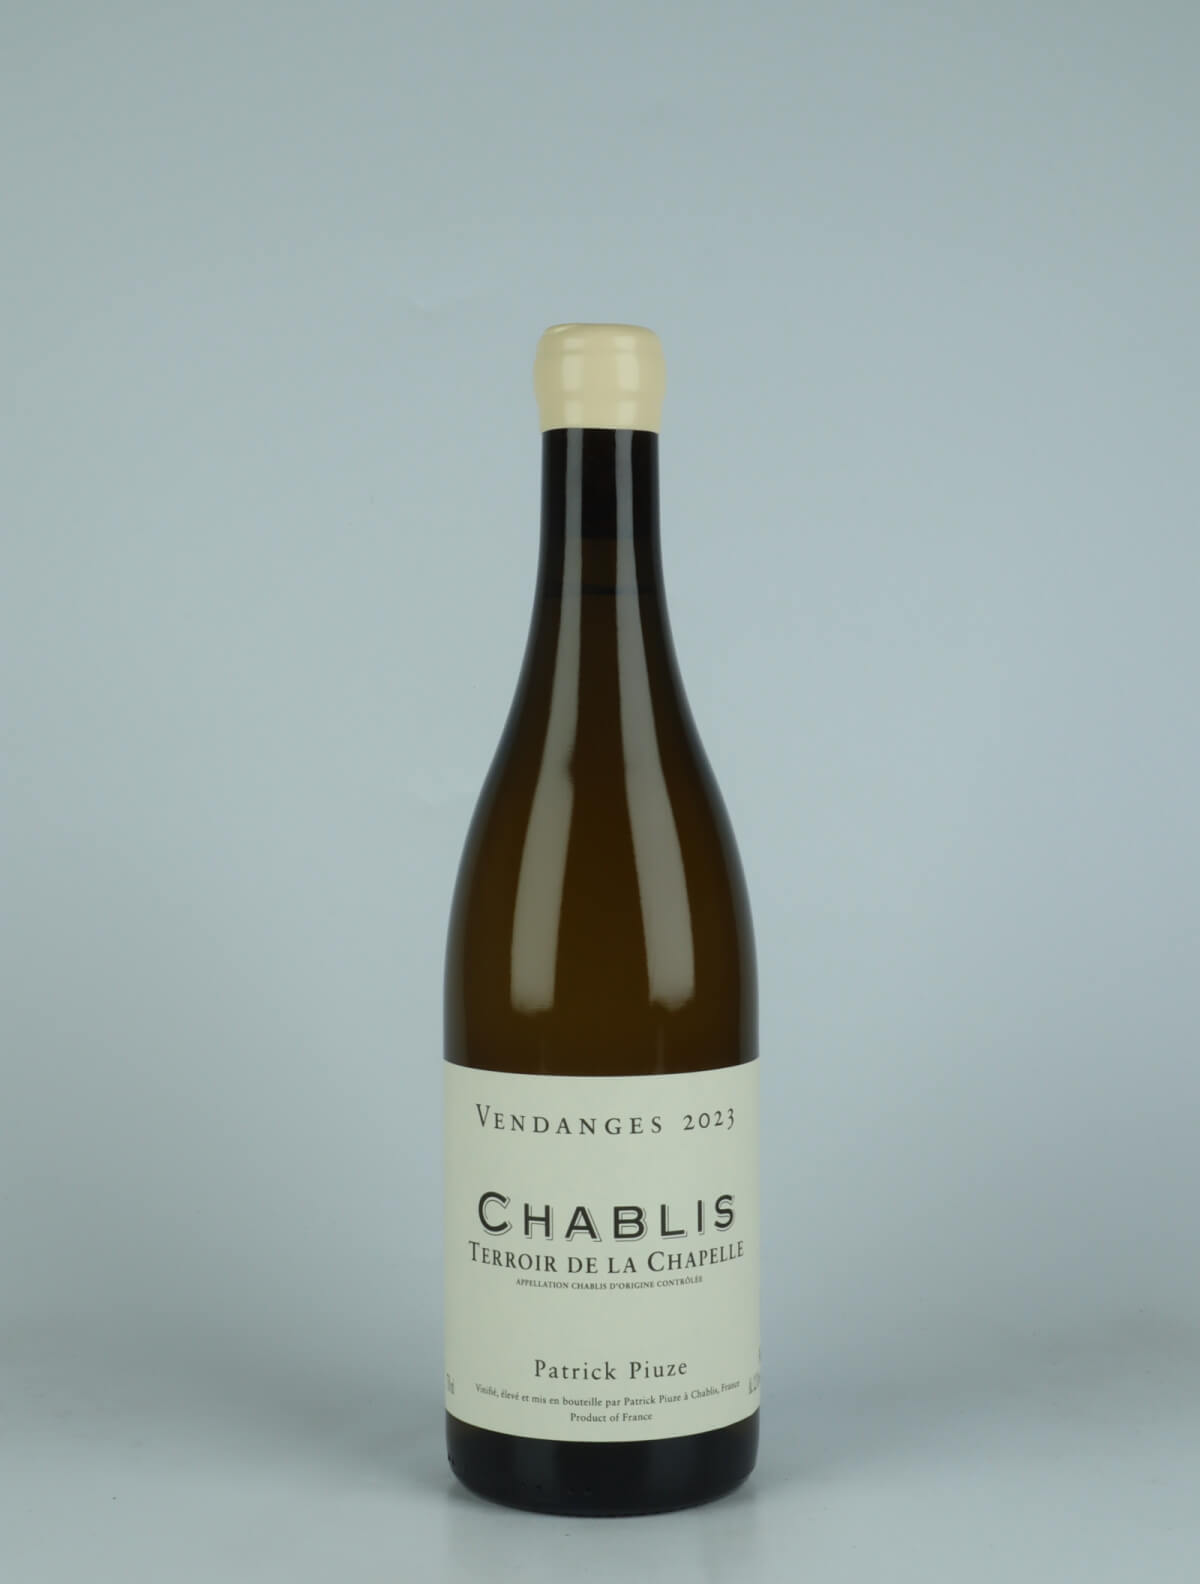 A bottle 2023 Chablis - Terroir de la Chapelle White wine from Patrick Piuze, Burgundy in France